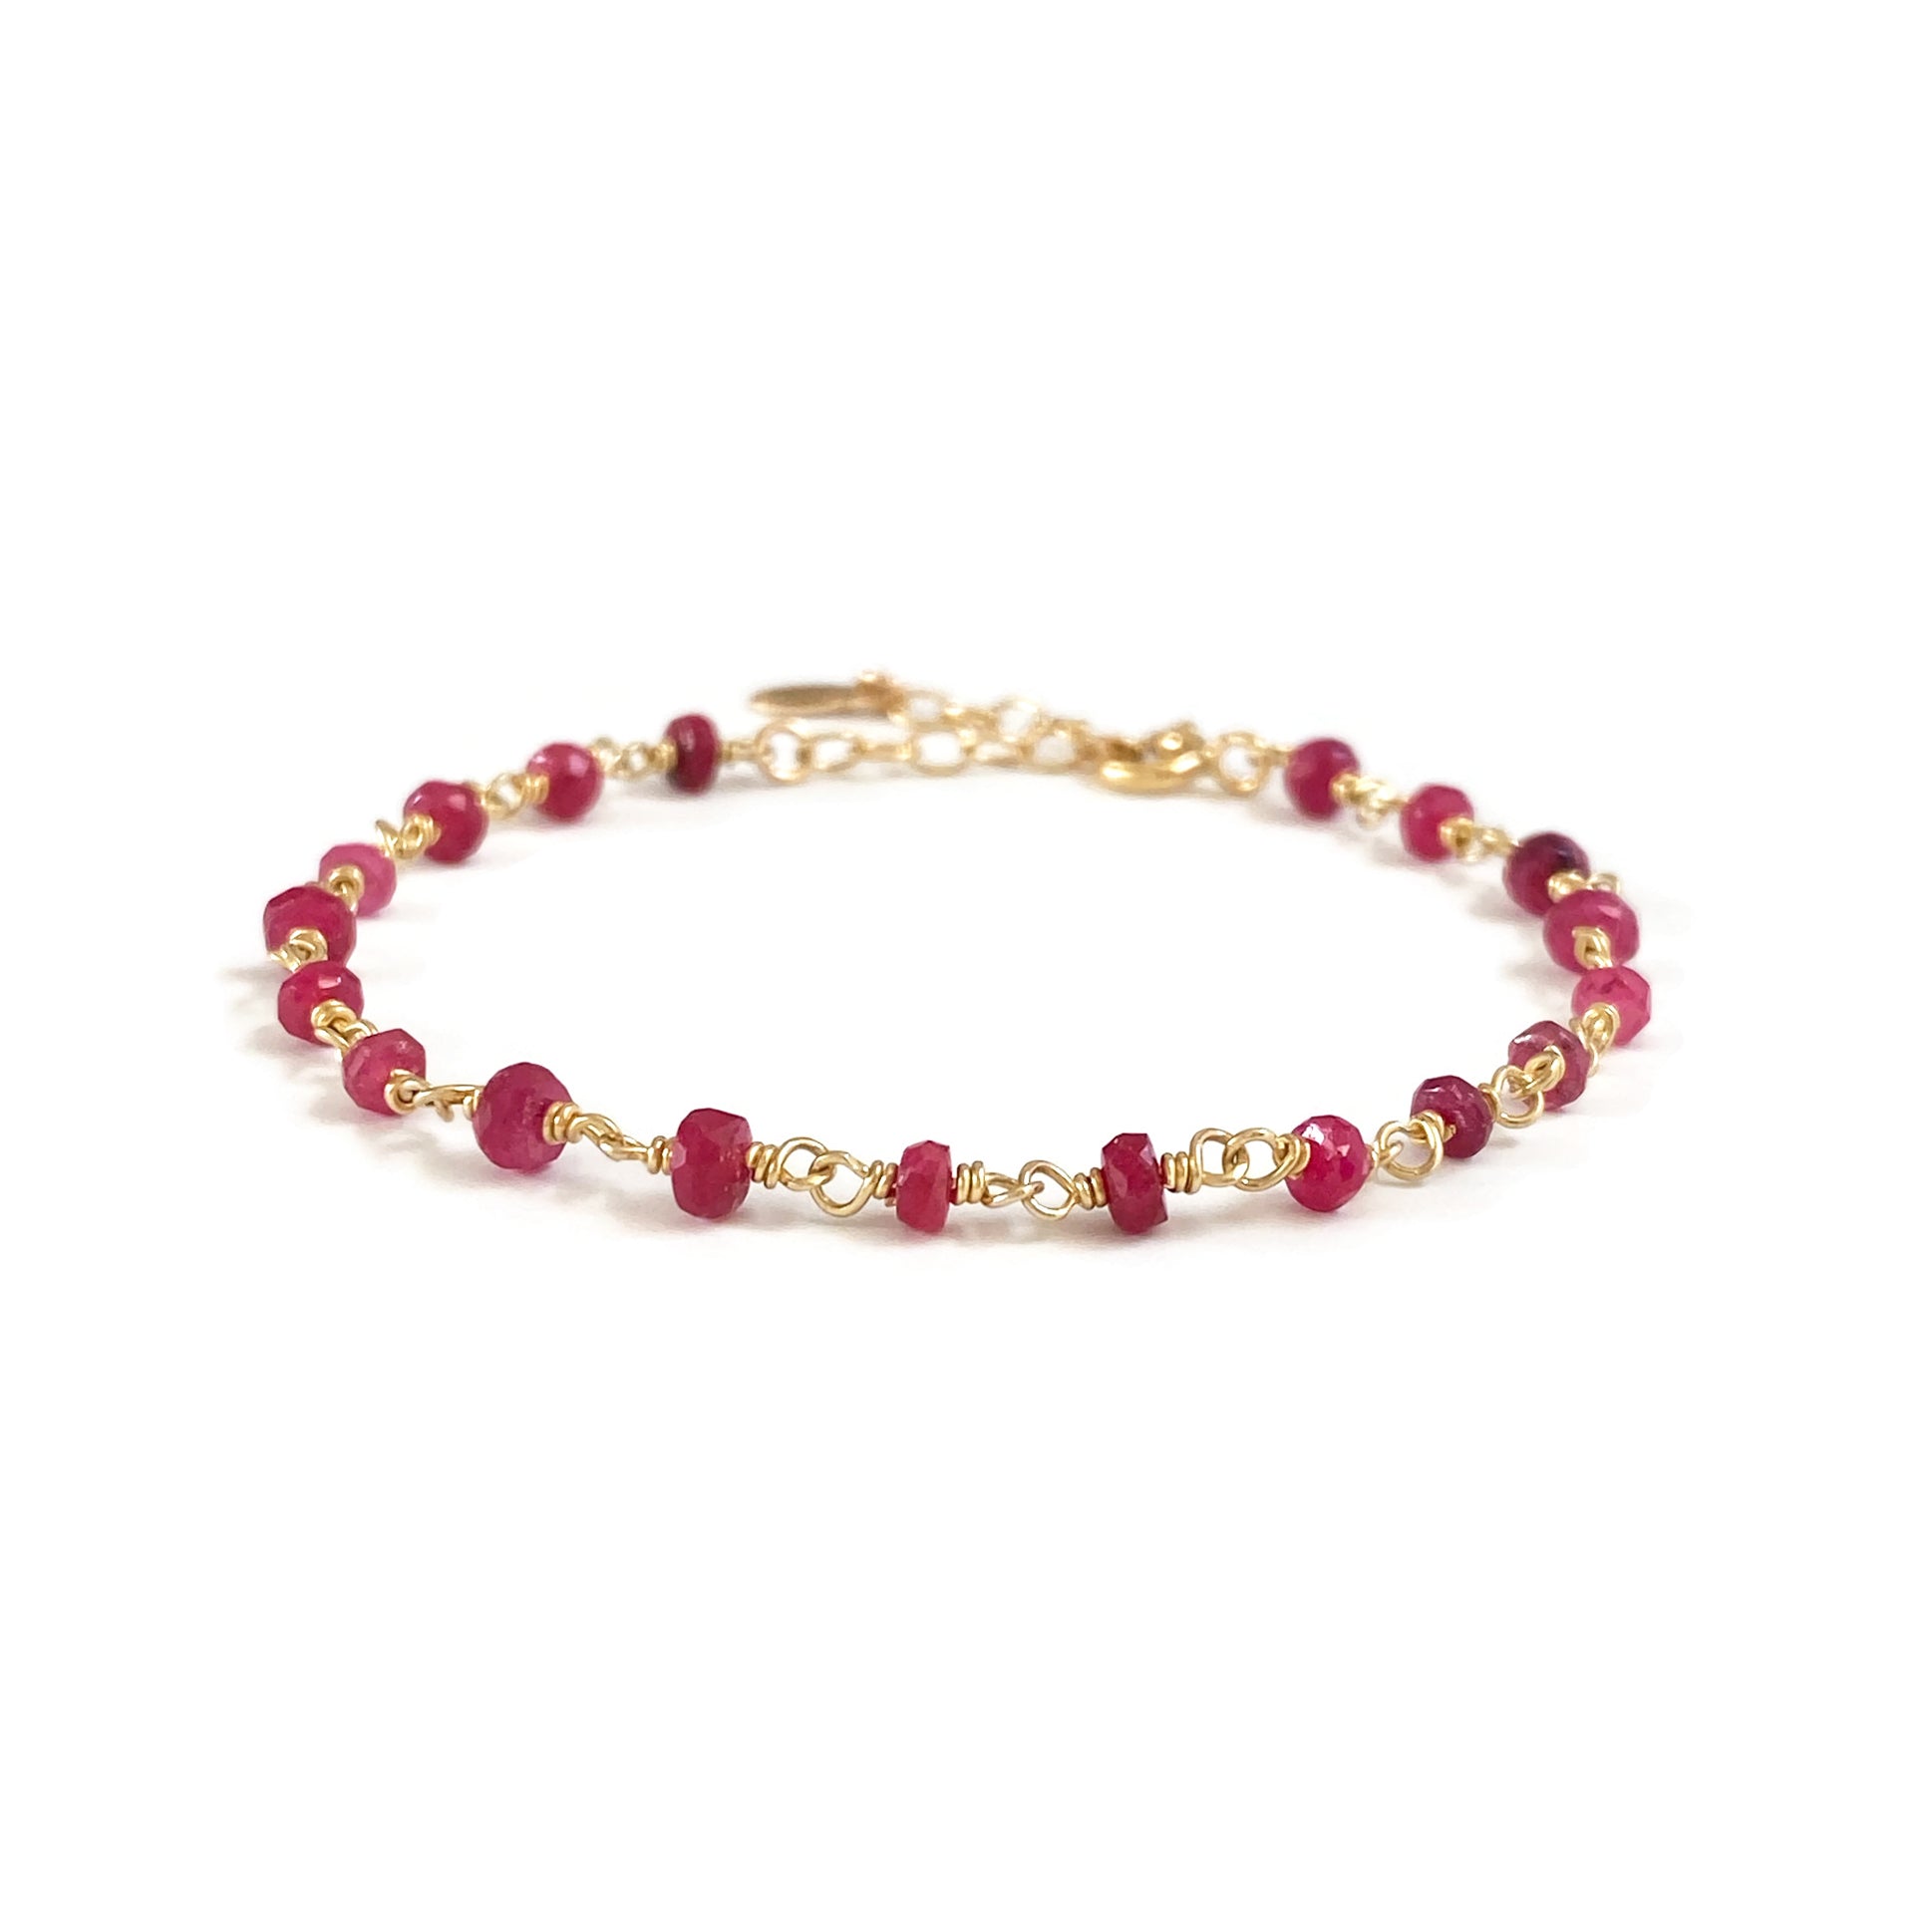 This dainty ruby bracelet is July Ruby birthstone bracelet.